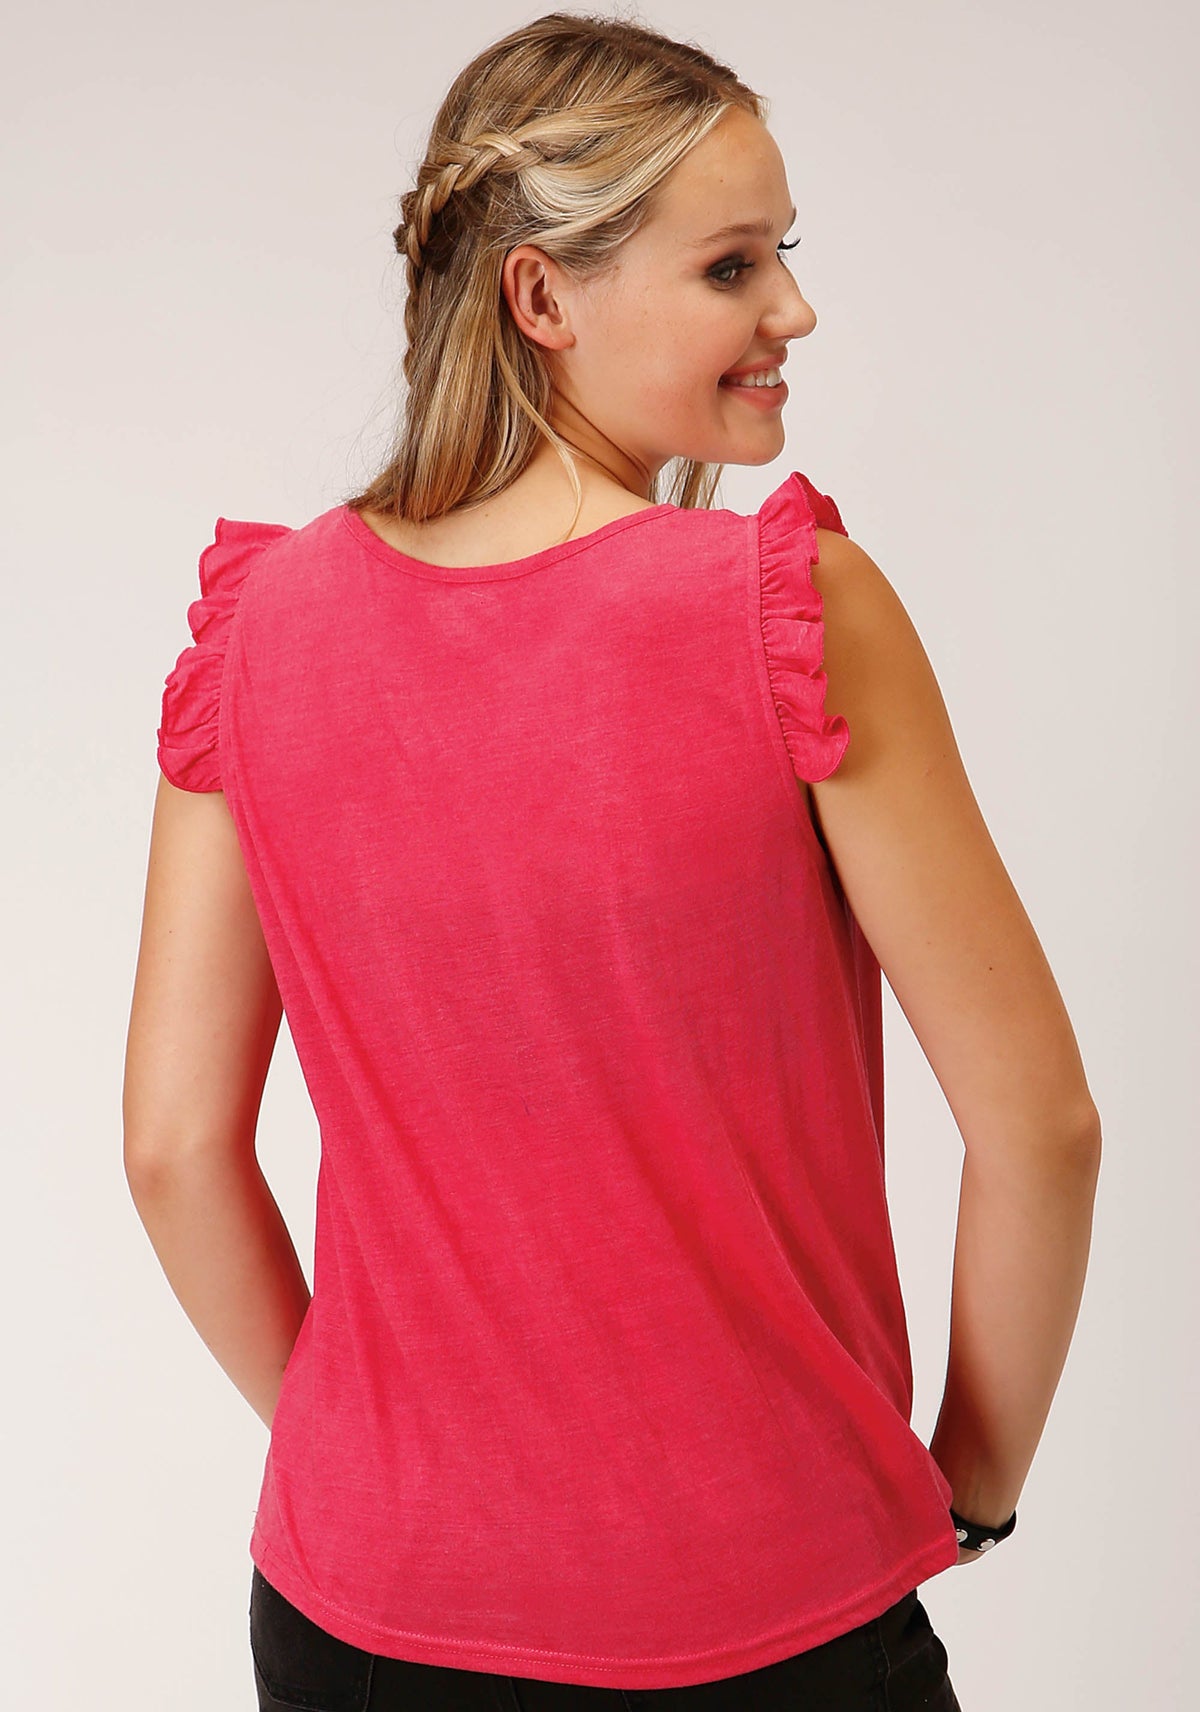 Roper Womens Sleeveless Knit Poly Rayon Watermelon Pink Slvls Tee Top